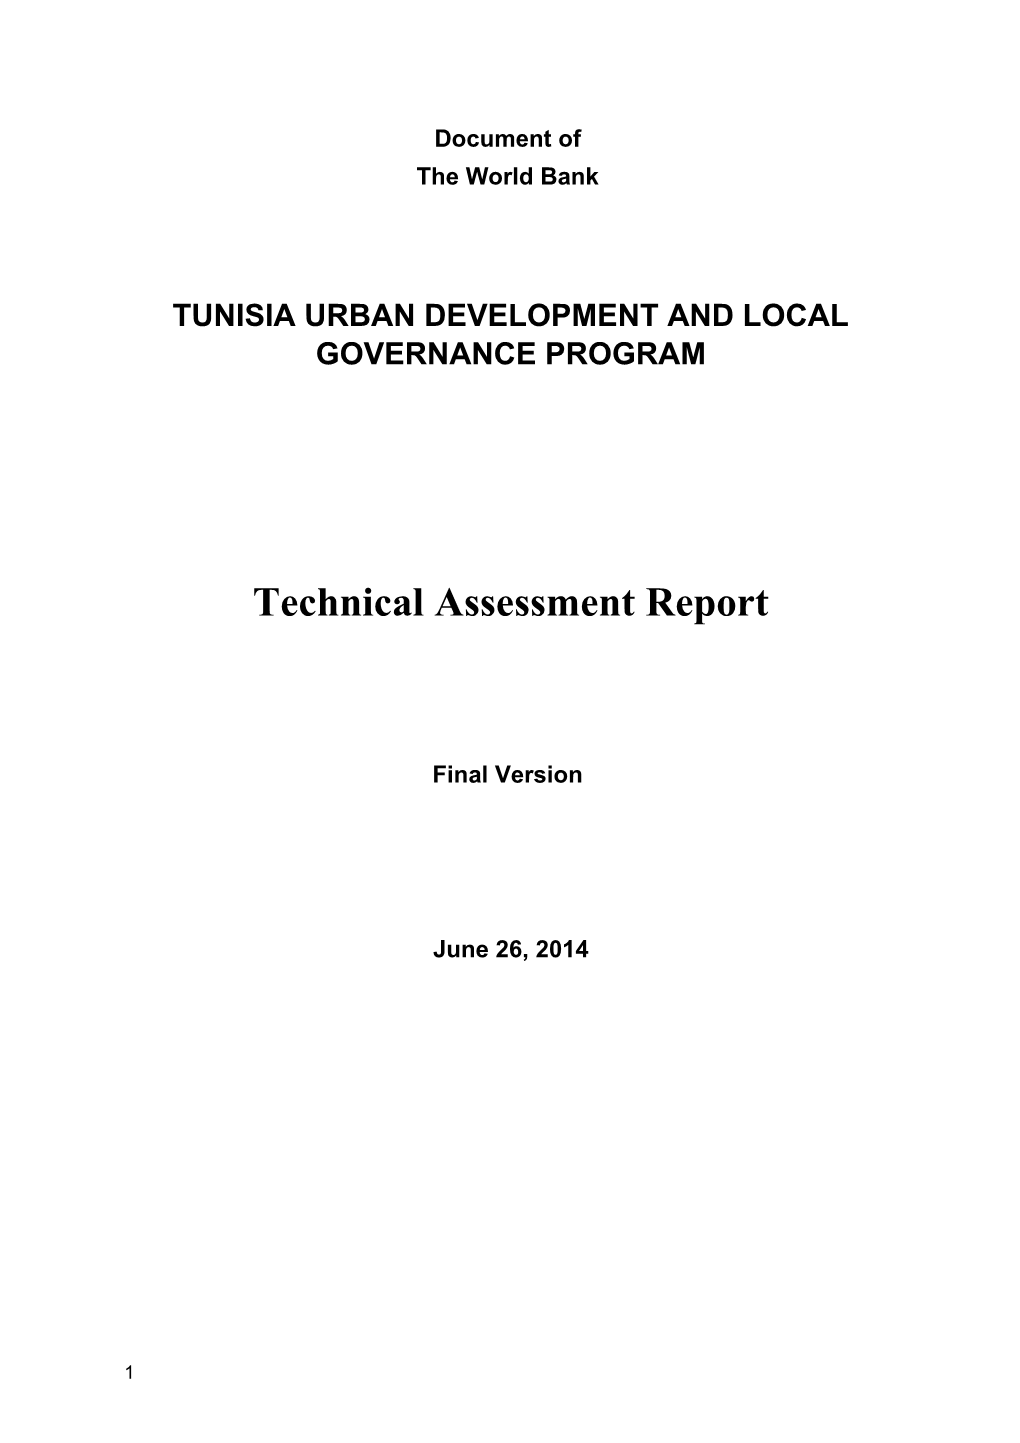 Tunisia Urban Development and Local Governance Program